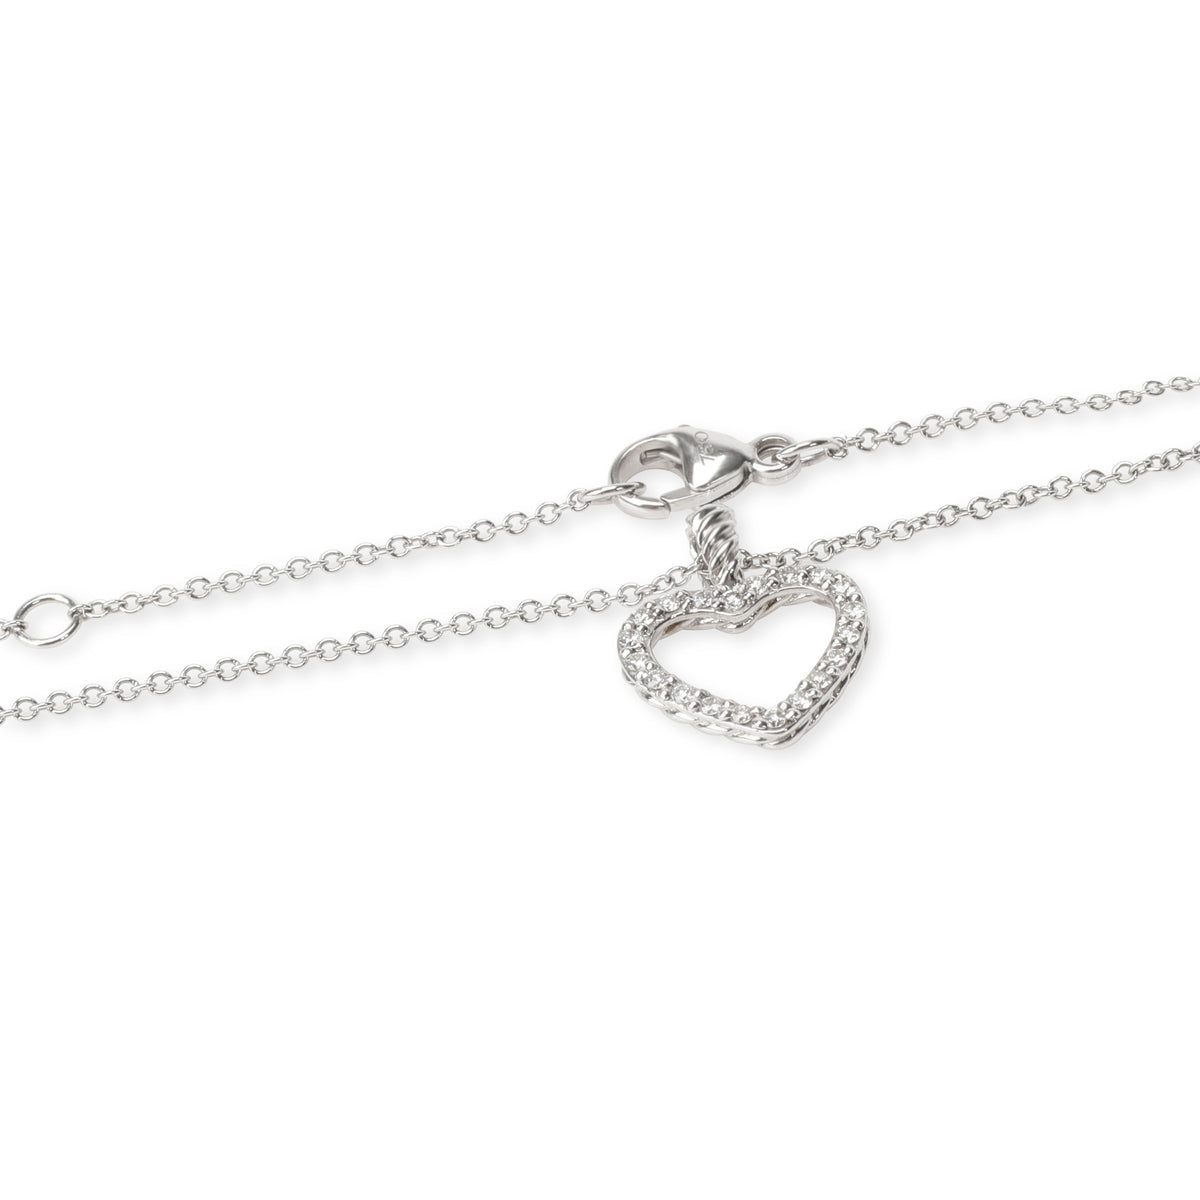 David Yurman Cable Diamond Heart Necklace in 18K White Gold 0.10 CTW